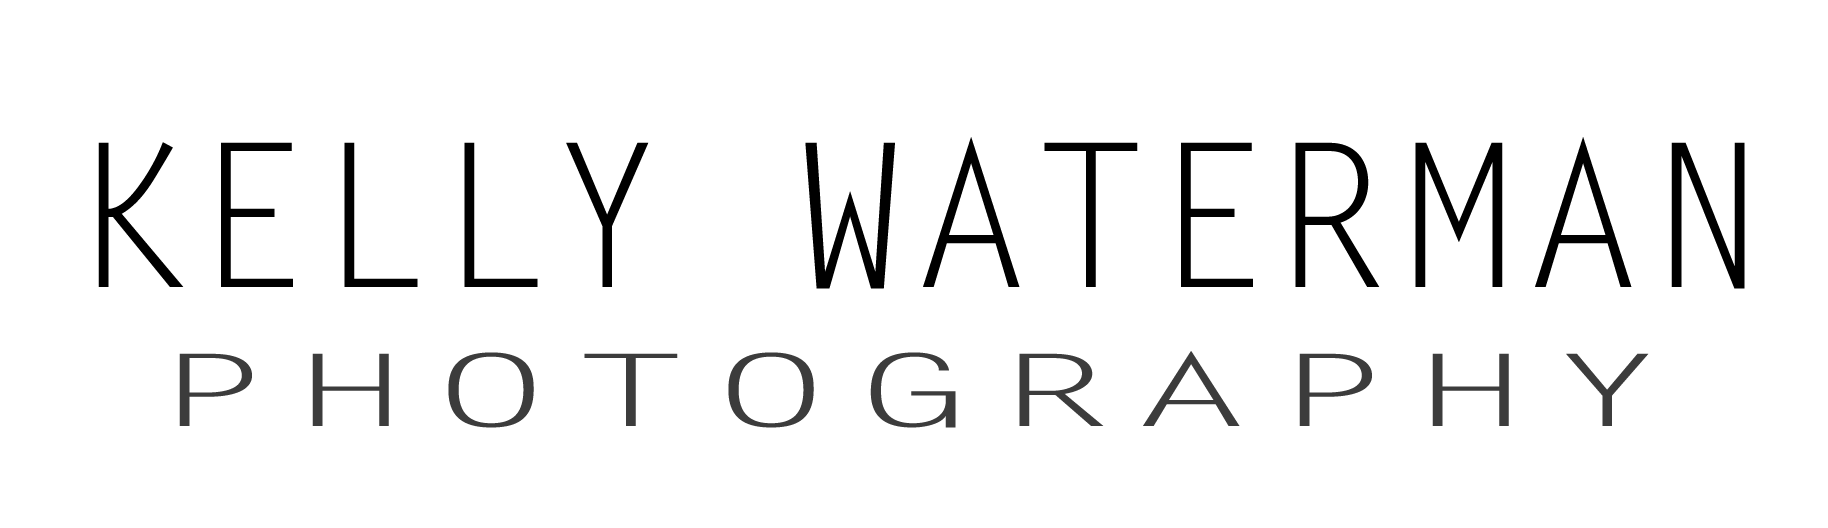 KellyWatermanphoto Logo